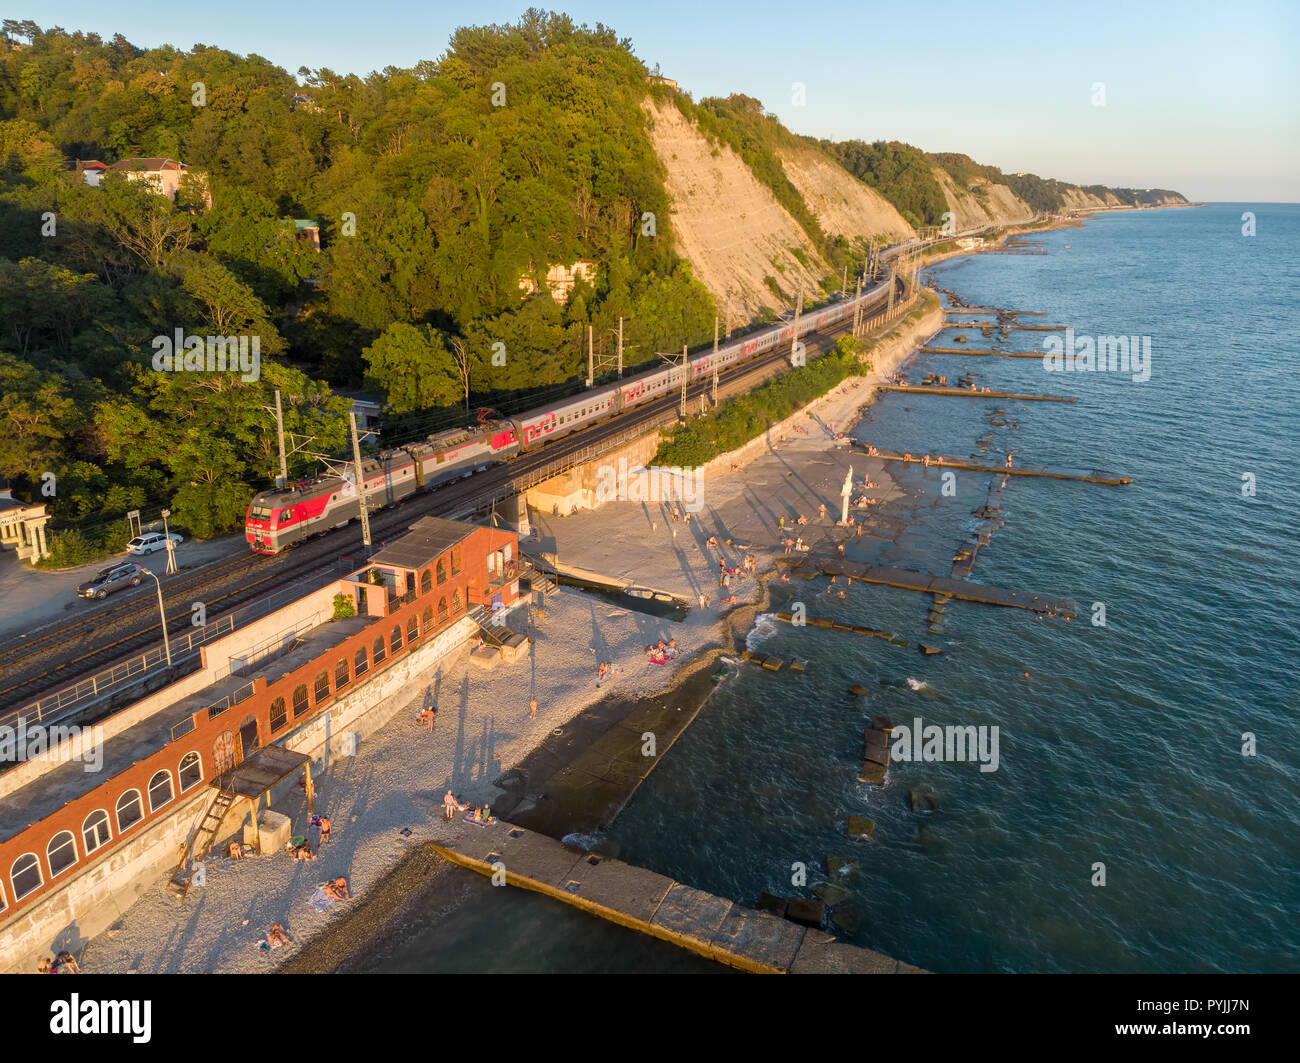 RUSSIA, KRASNODAR KRAI, GIZELE-DERE VILLAGE,  August 13, 2018: A bird's-eye view of Gizel-Dere railway station and passing train along the Black Sea c Stock Photo